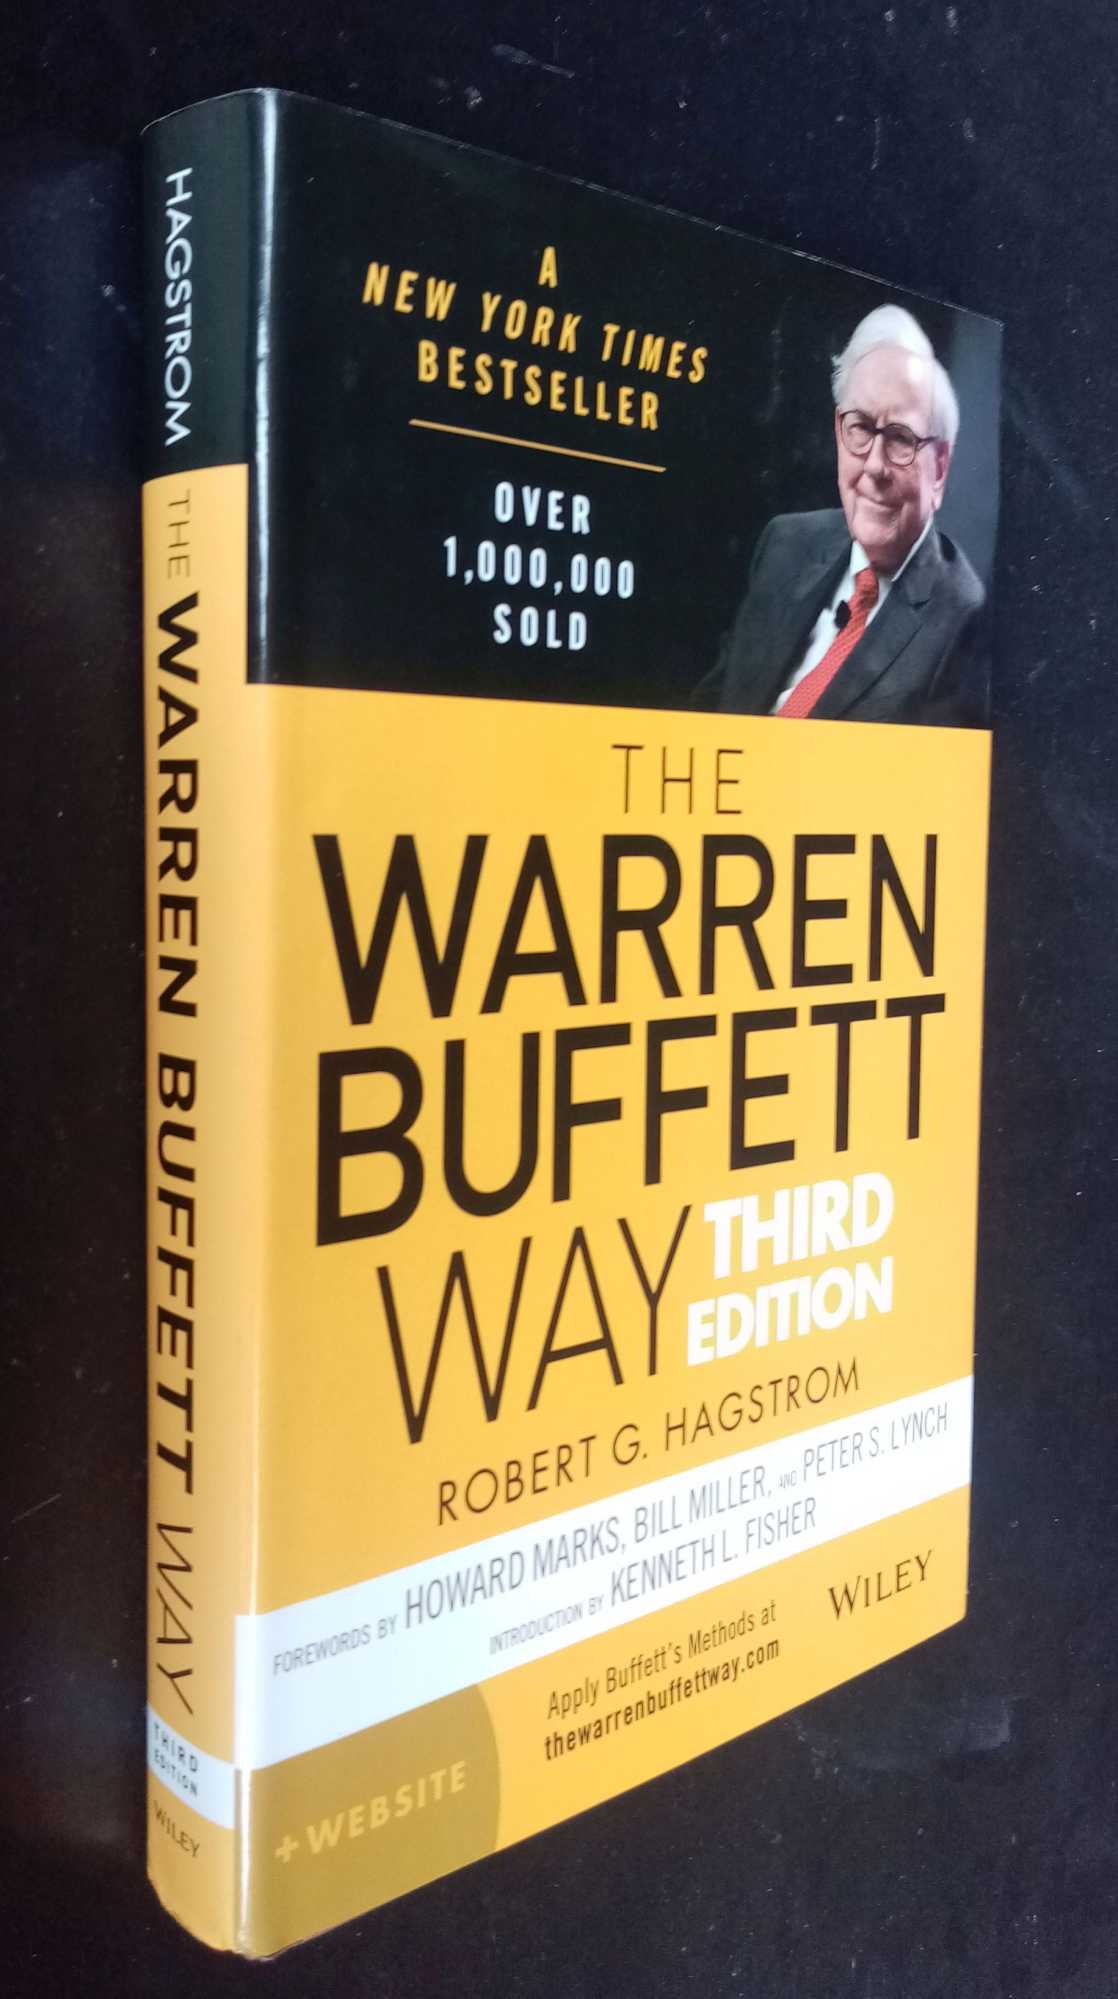 Robert Hagstrom - The Warren Buffett Way   [Third Edition]